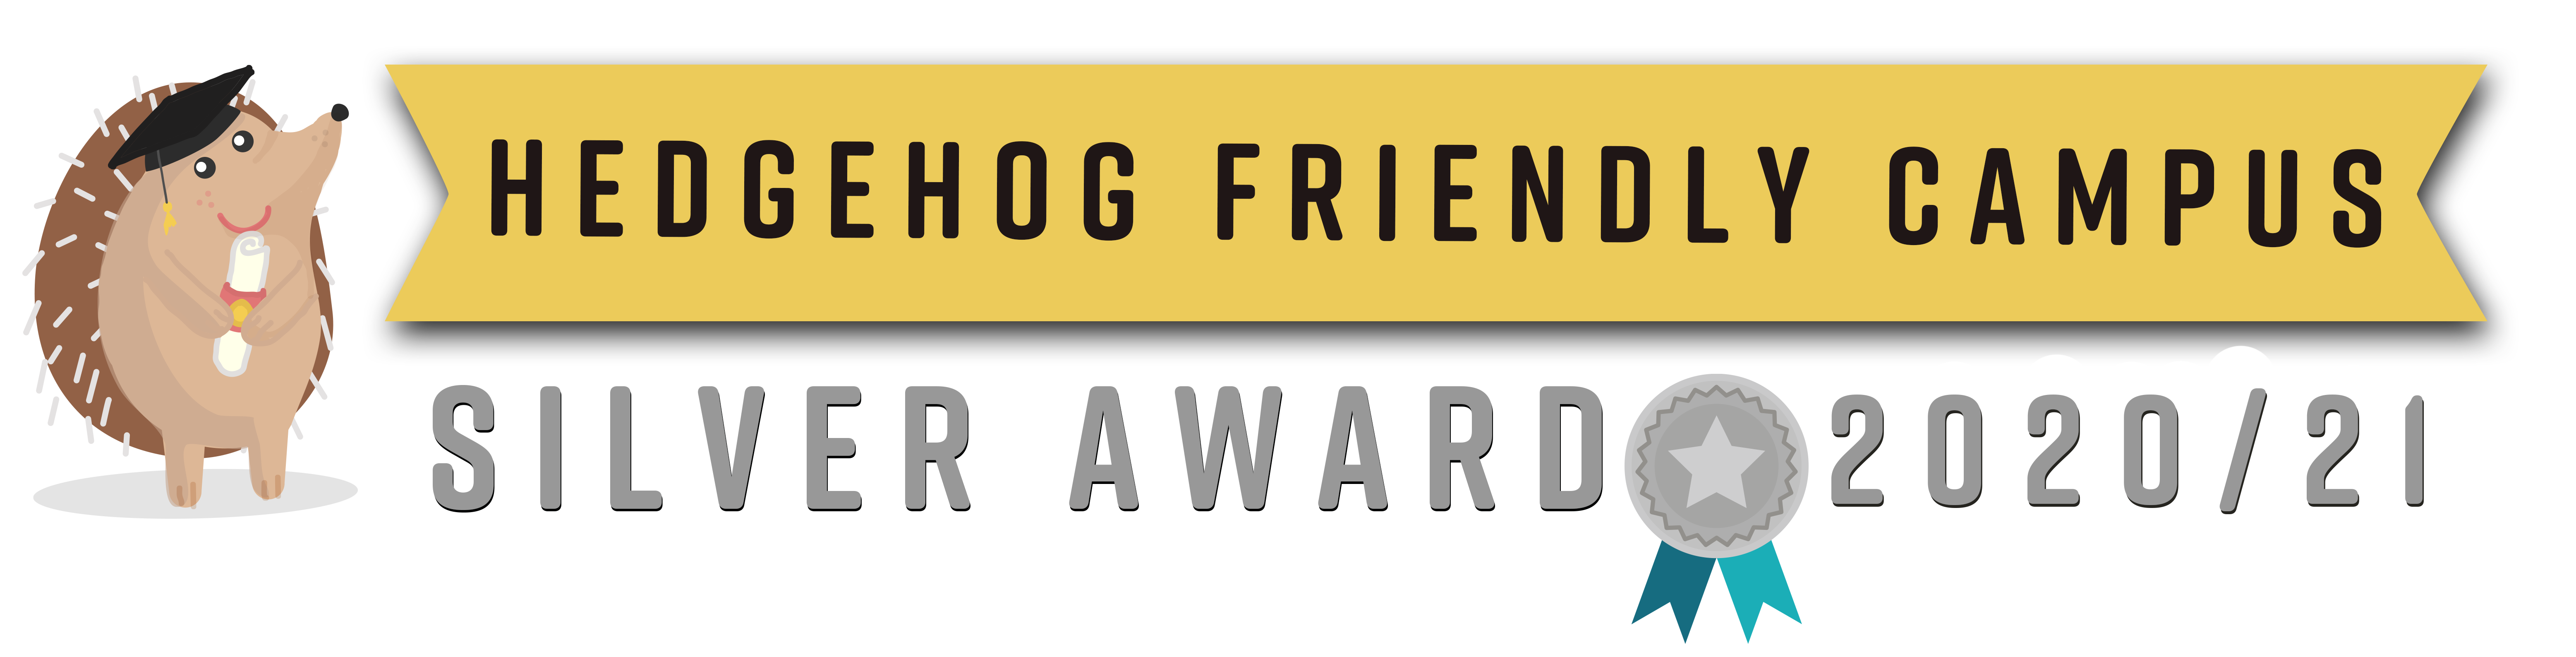 Hedgehog Friendly Campus, Silver Awards 2020/21